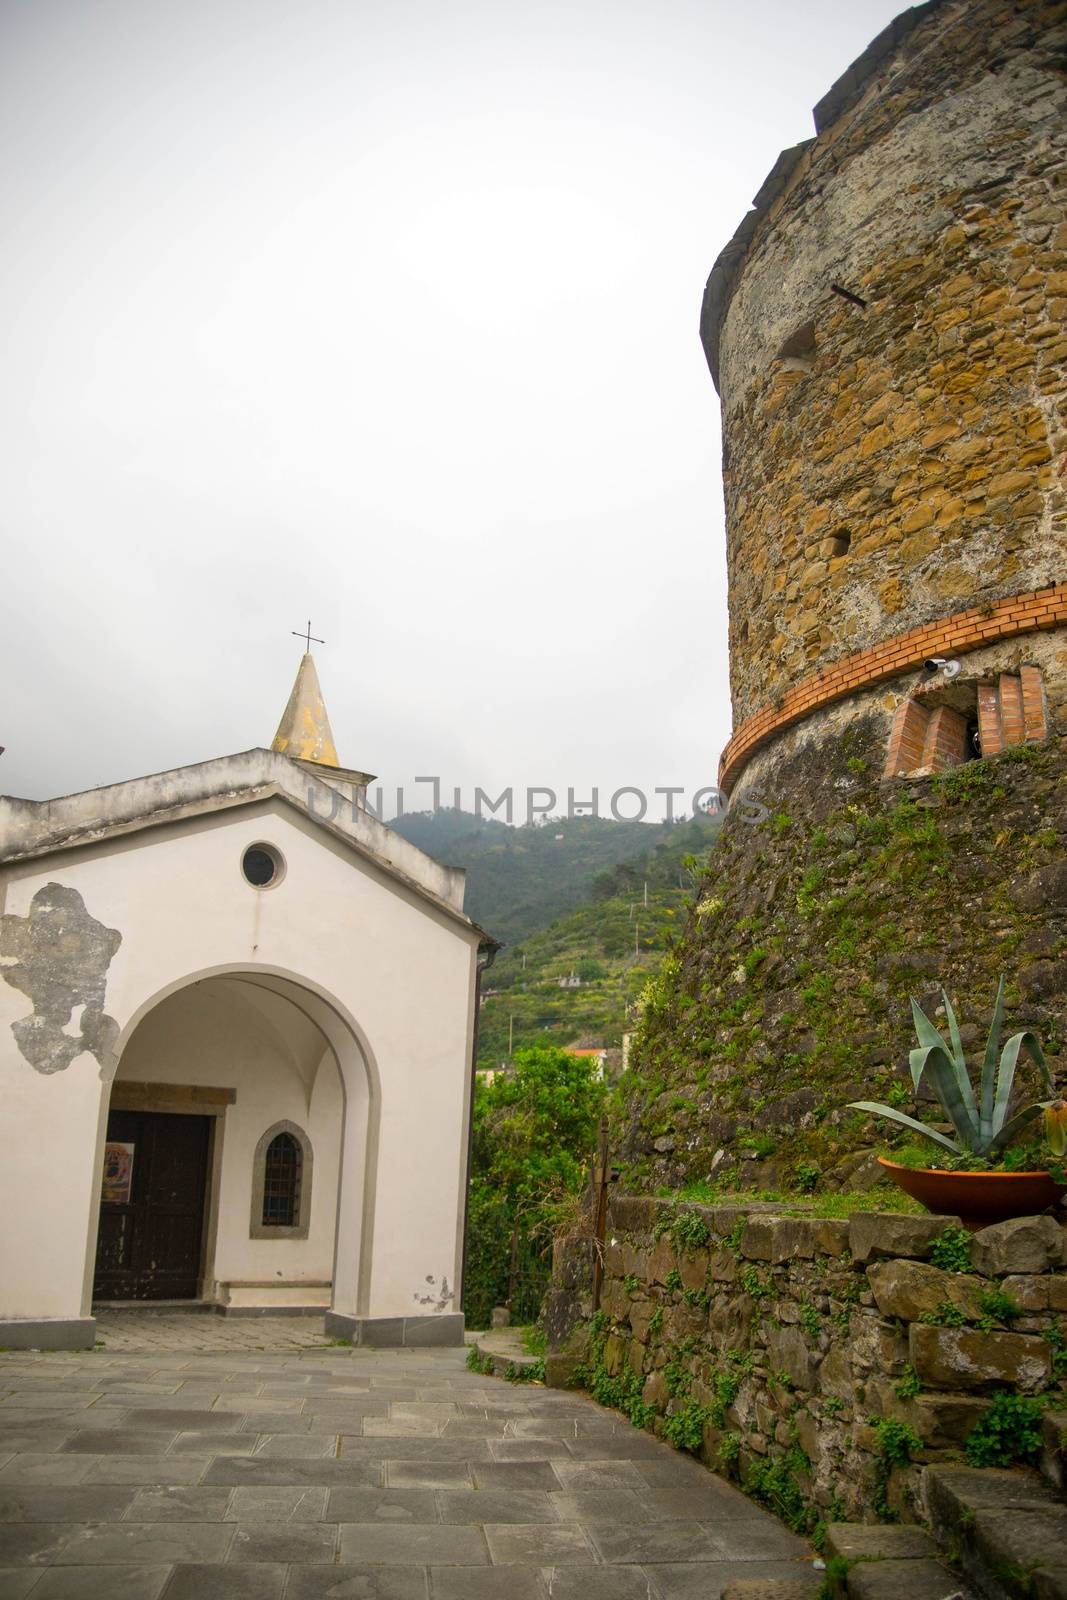 Castle and church in riomaggiore by javax